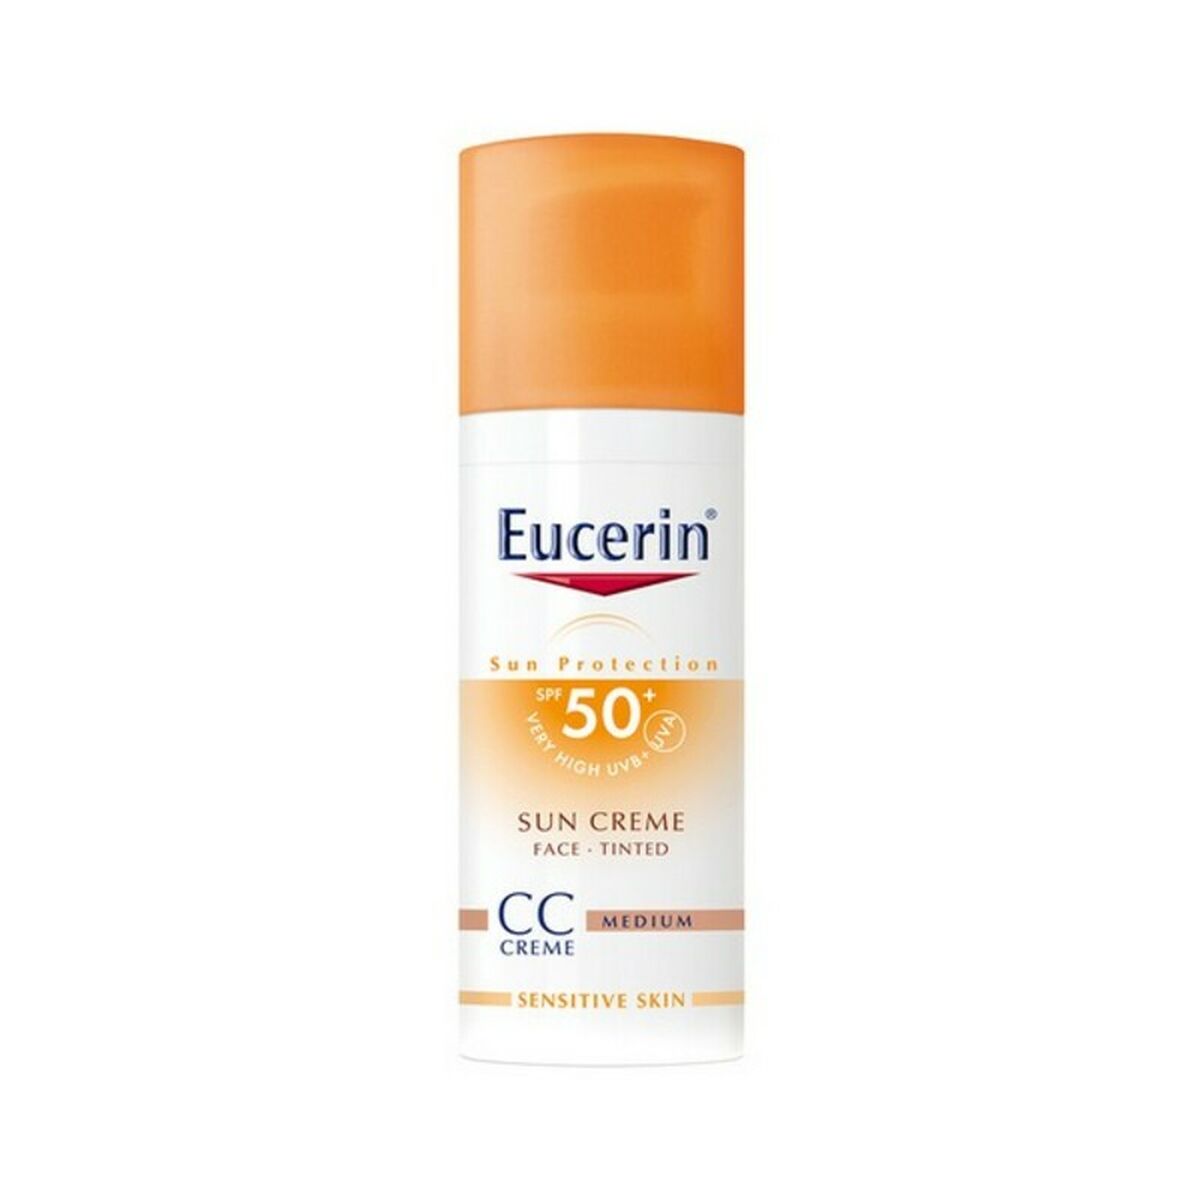 Sun Protection with Colour Eucerin Photoaging Control Tinted Medium SPF 50+ (50 ml)-0